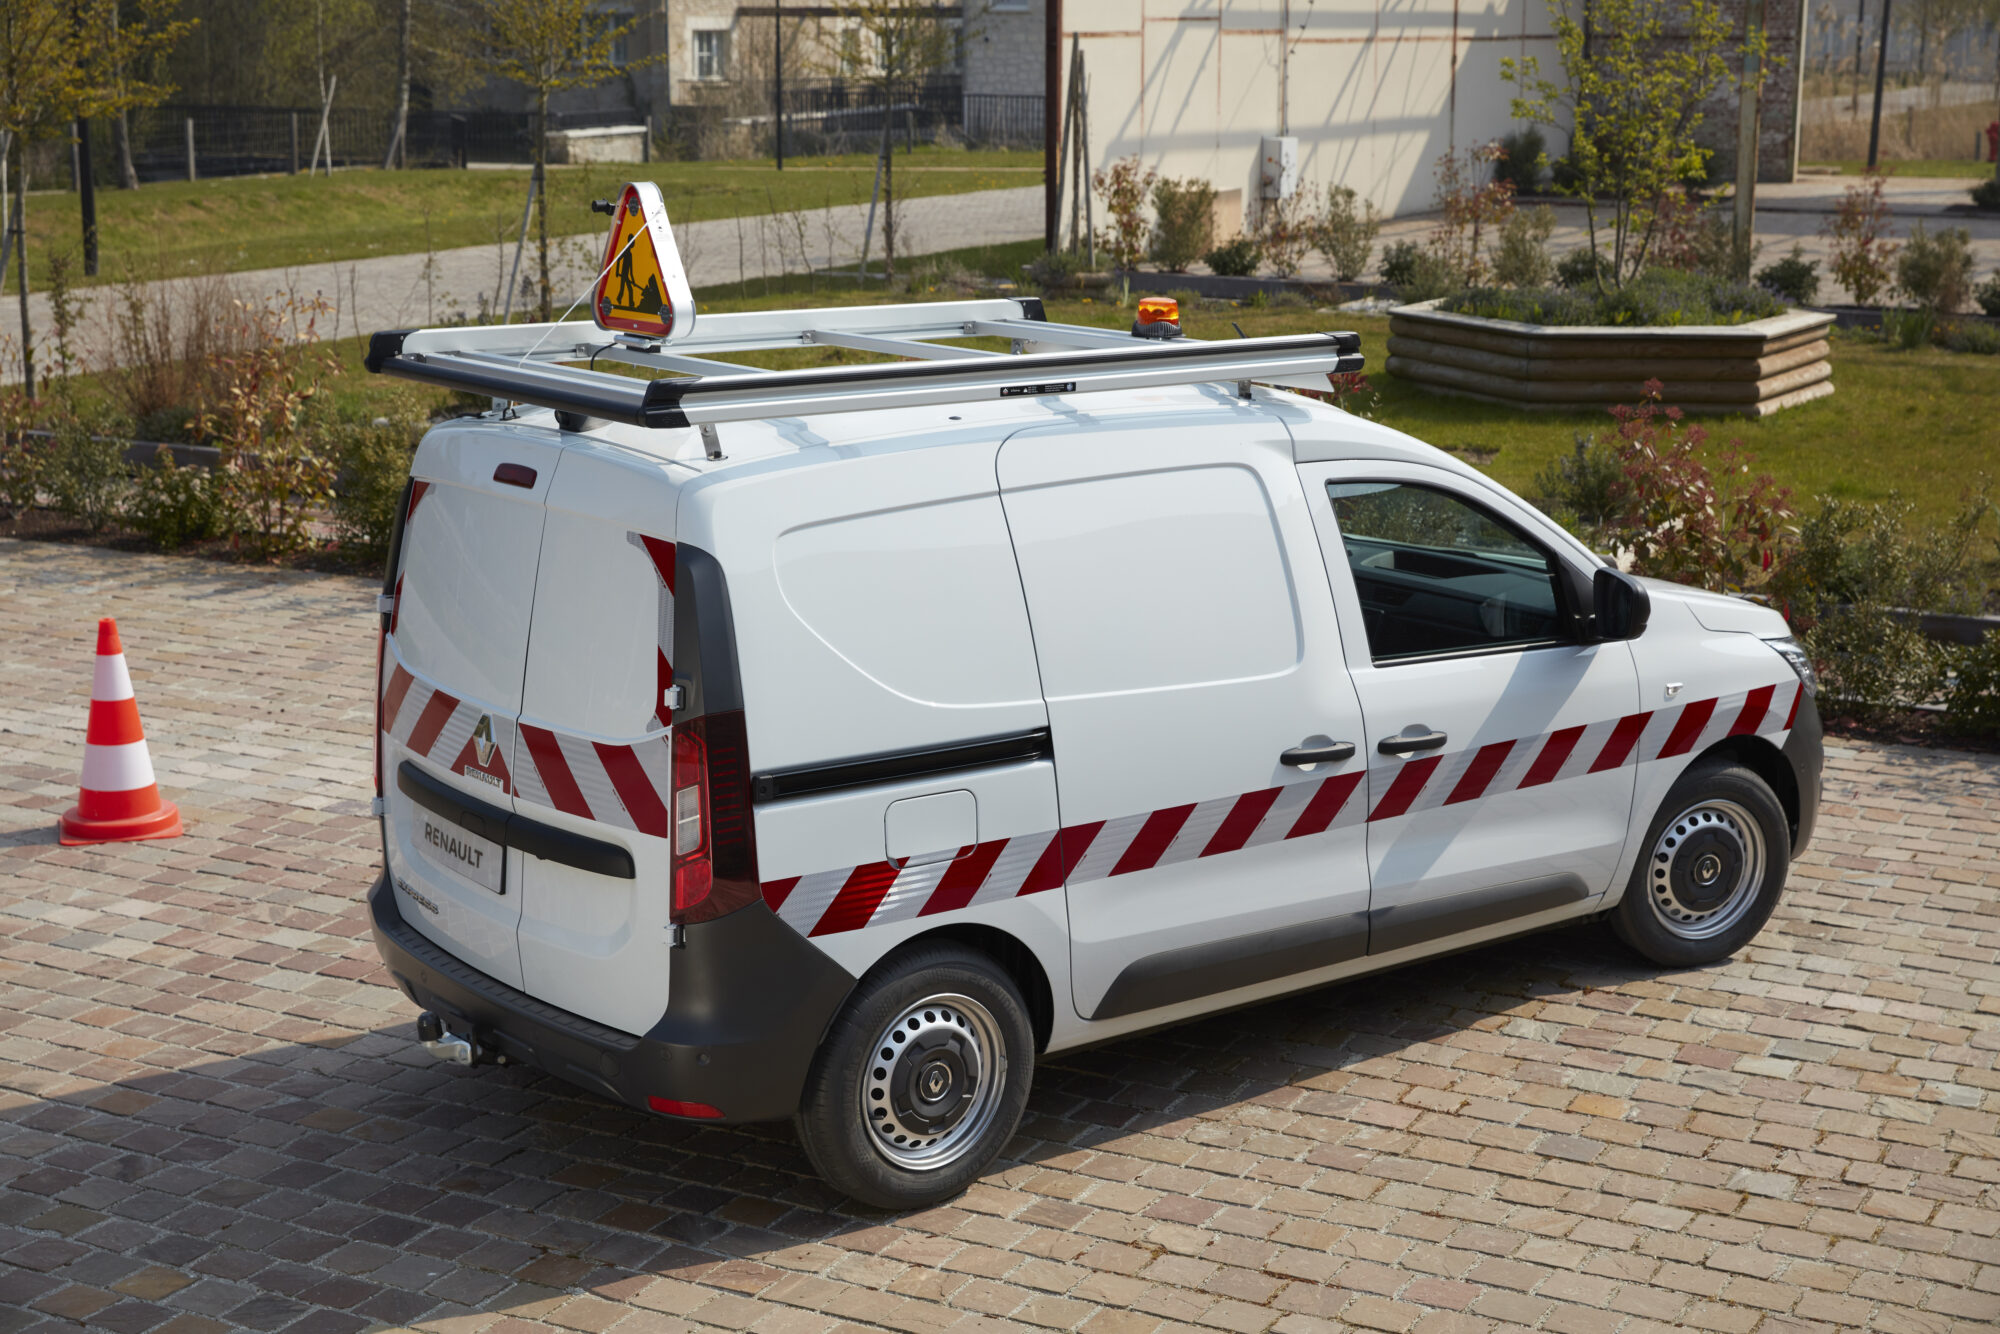 2021 - New Renault Express Van - Tests drive - Converted vehicles